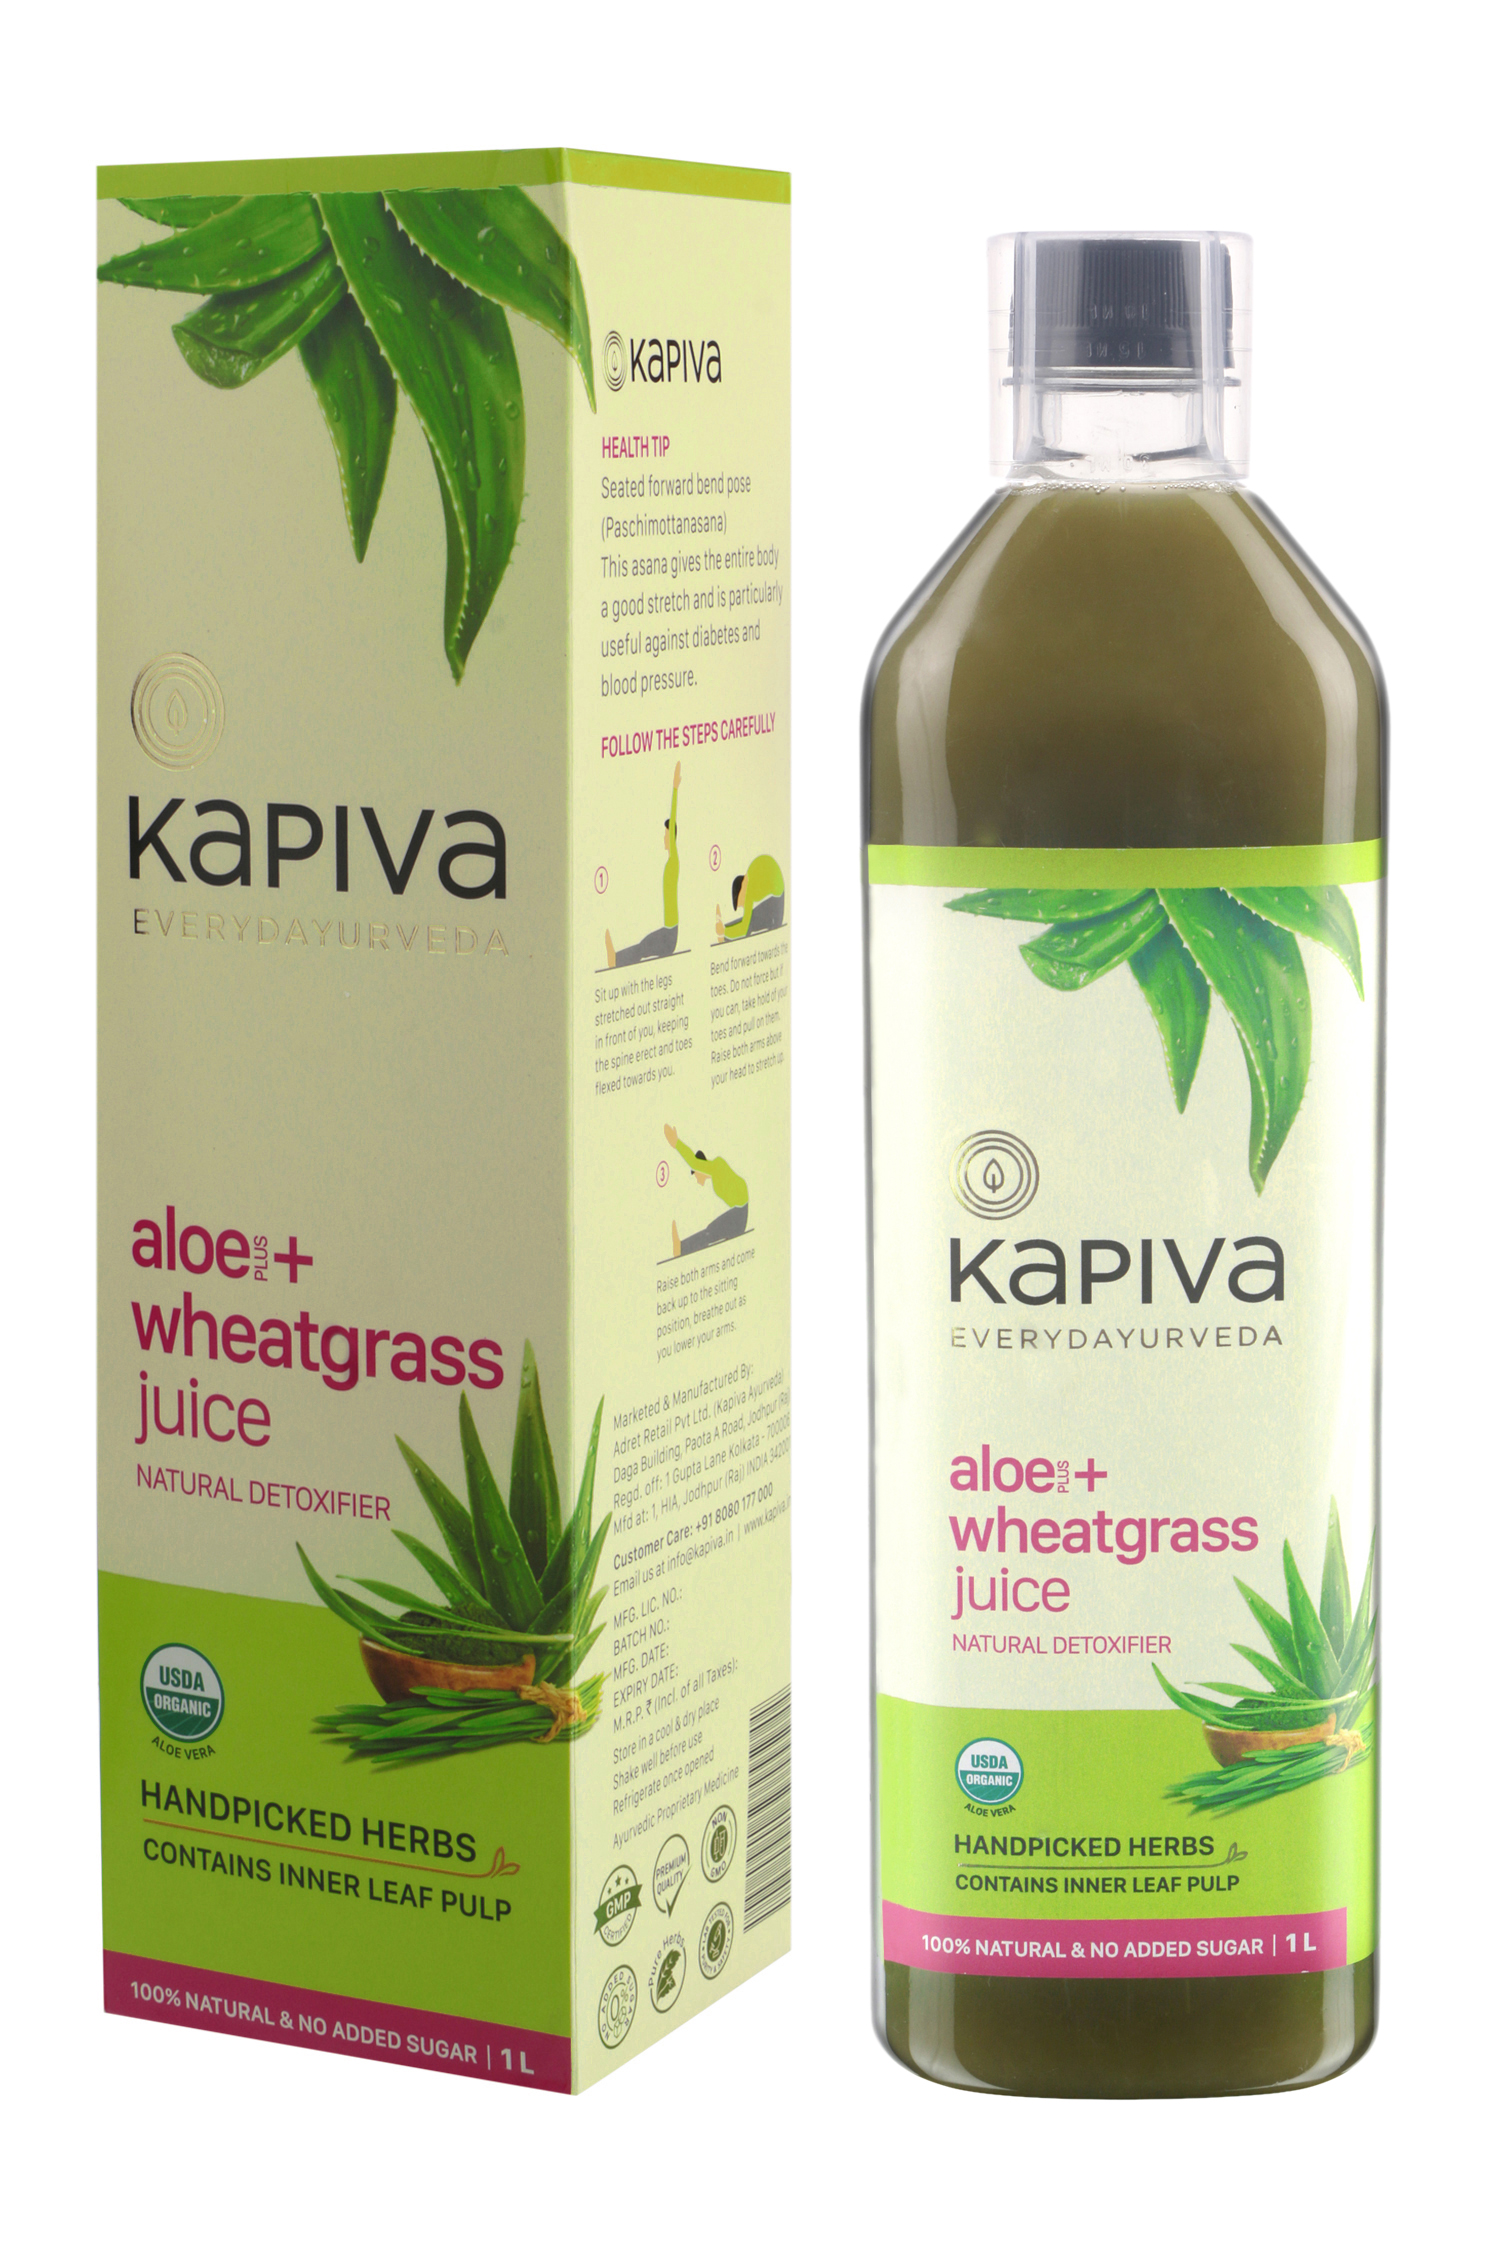 Buy Kapiva Aloe + Wheatgrass Juice at Best Price Online